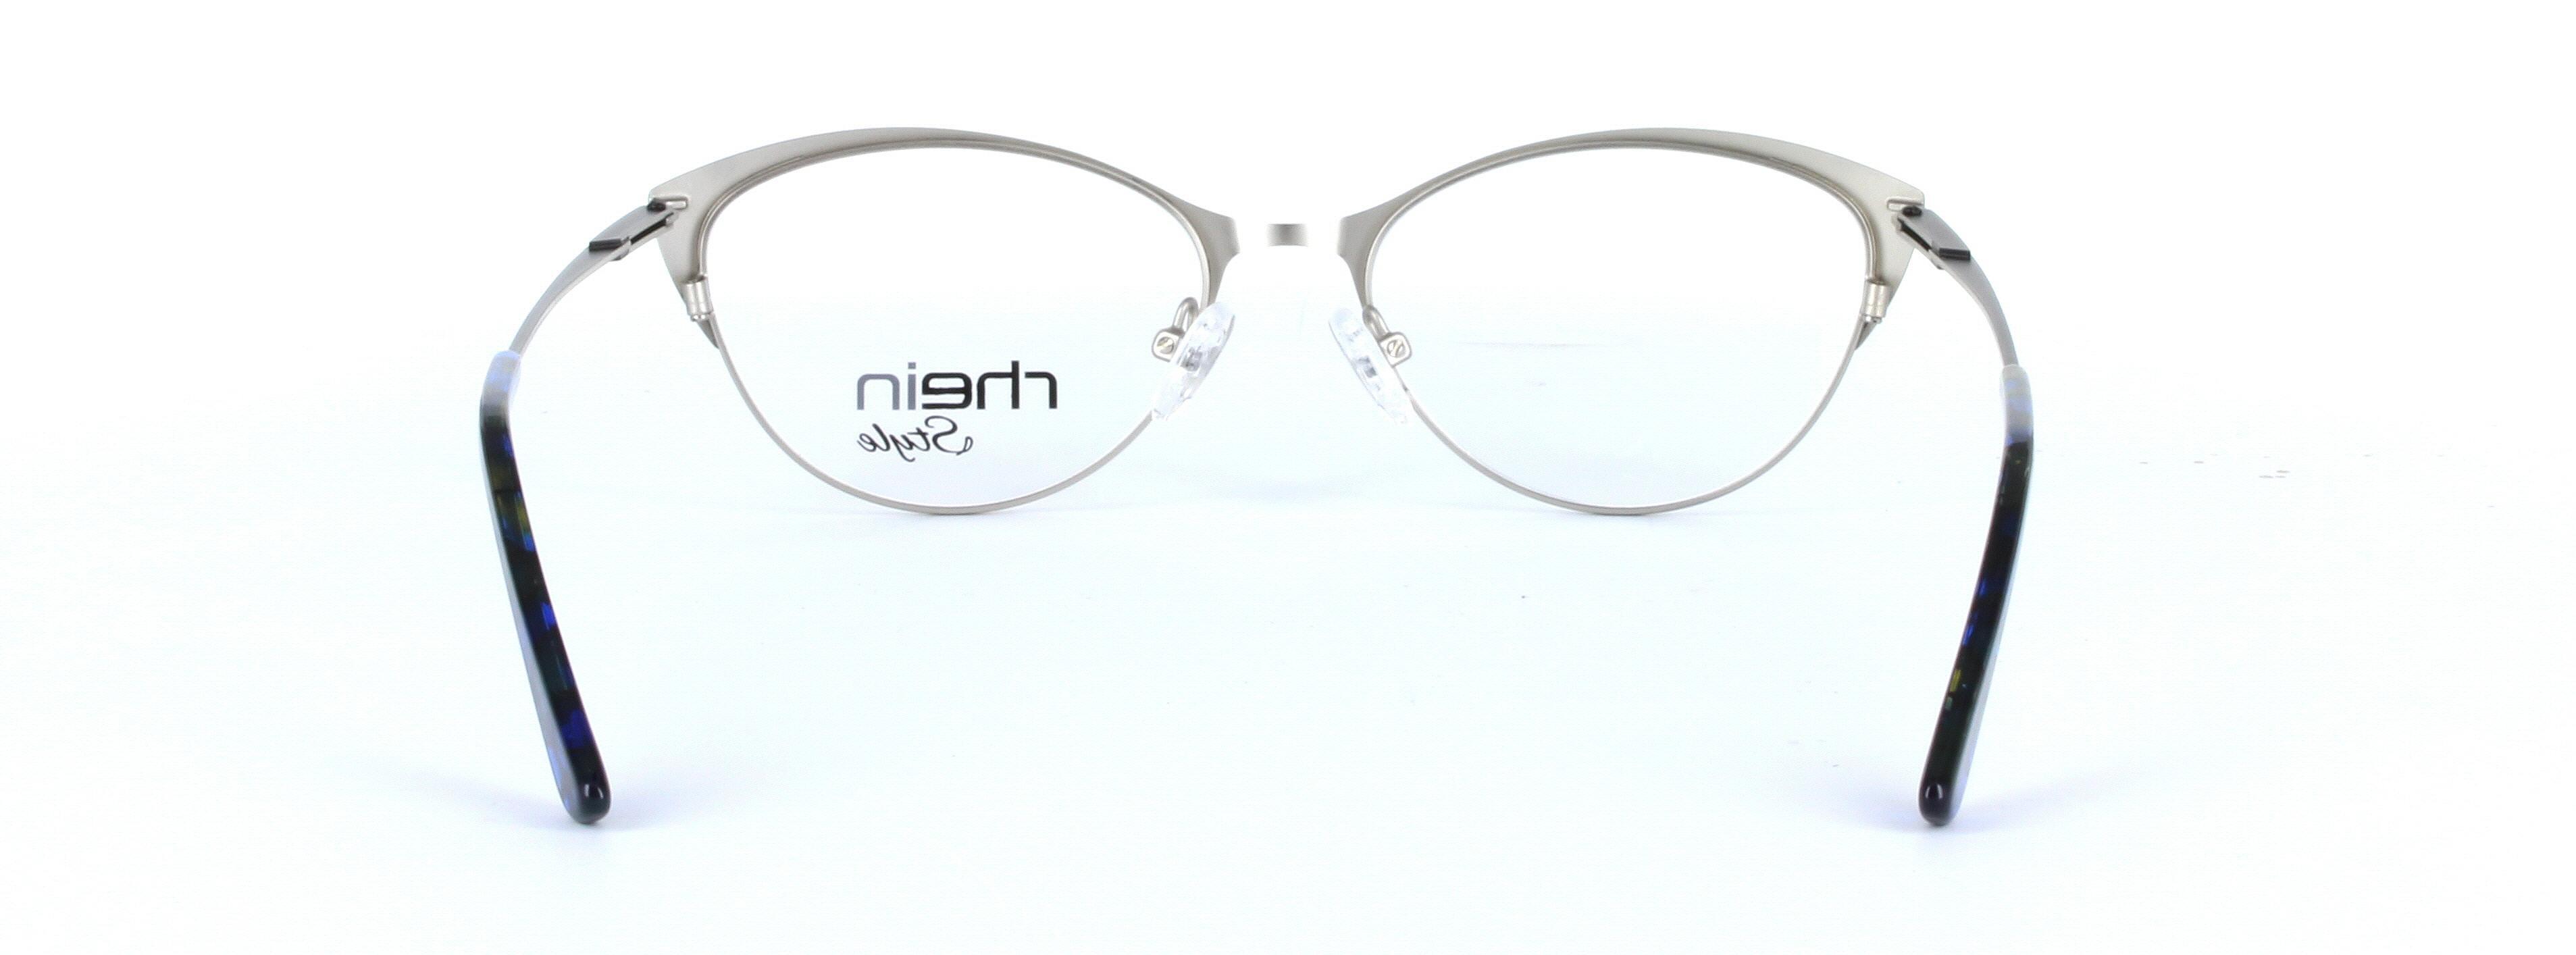 Felicity Black Full Rim Oval Round Metal Glasses - Image View 3